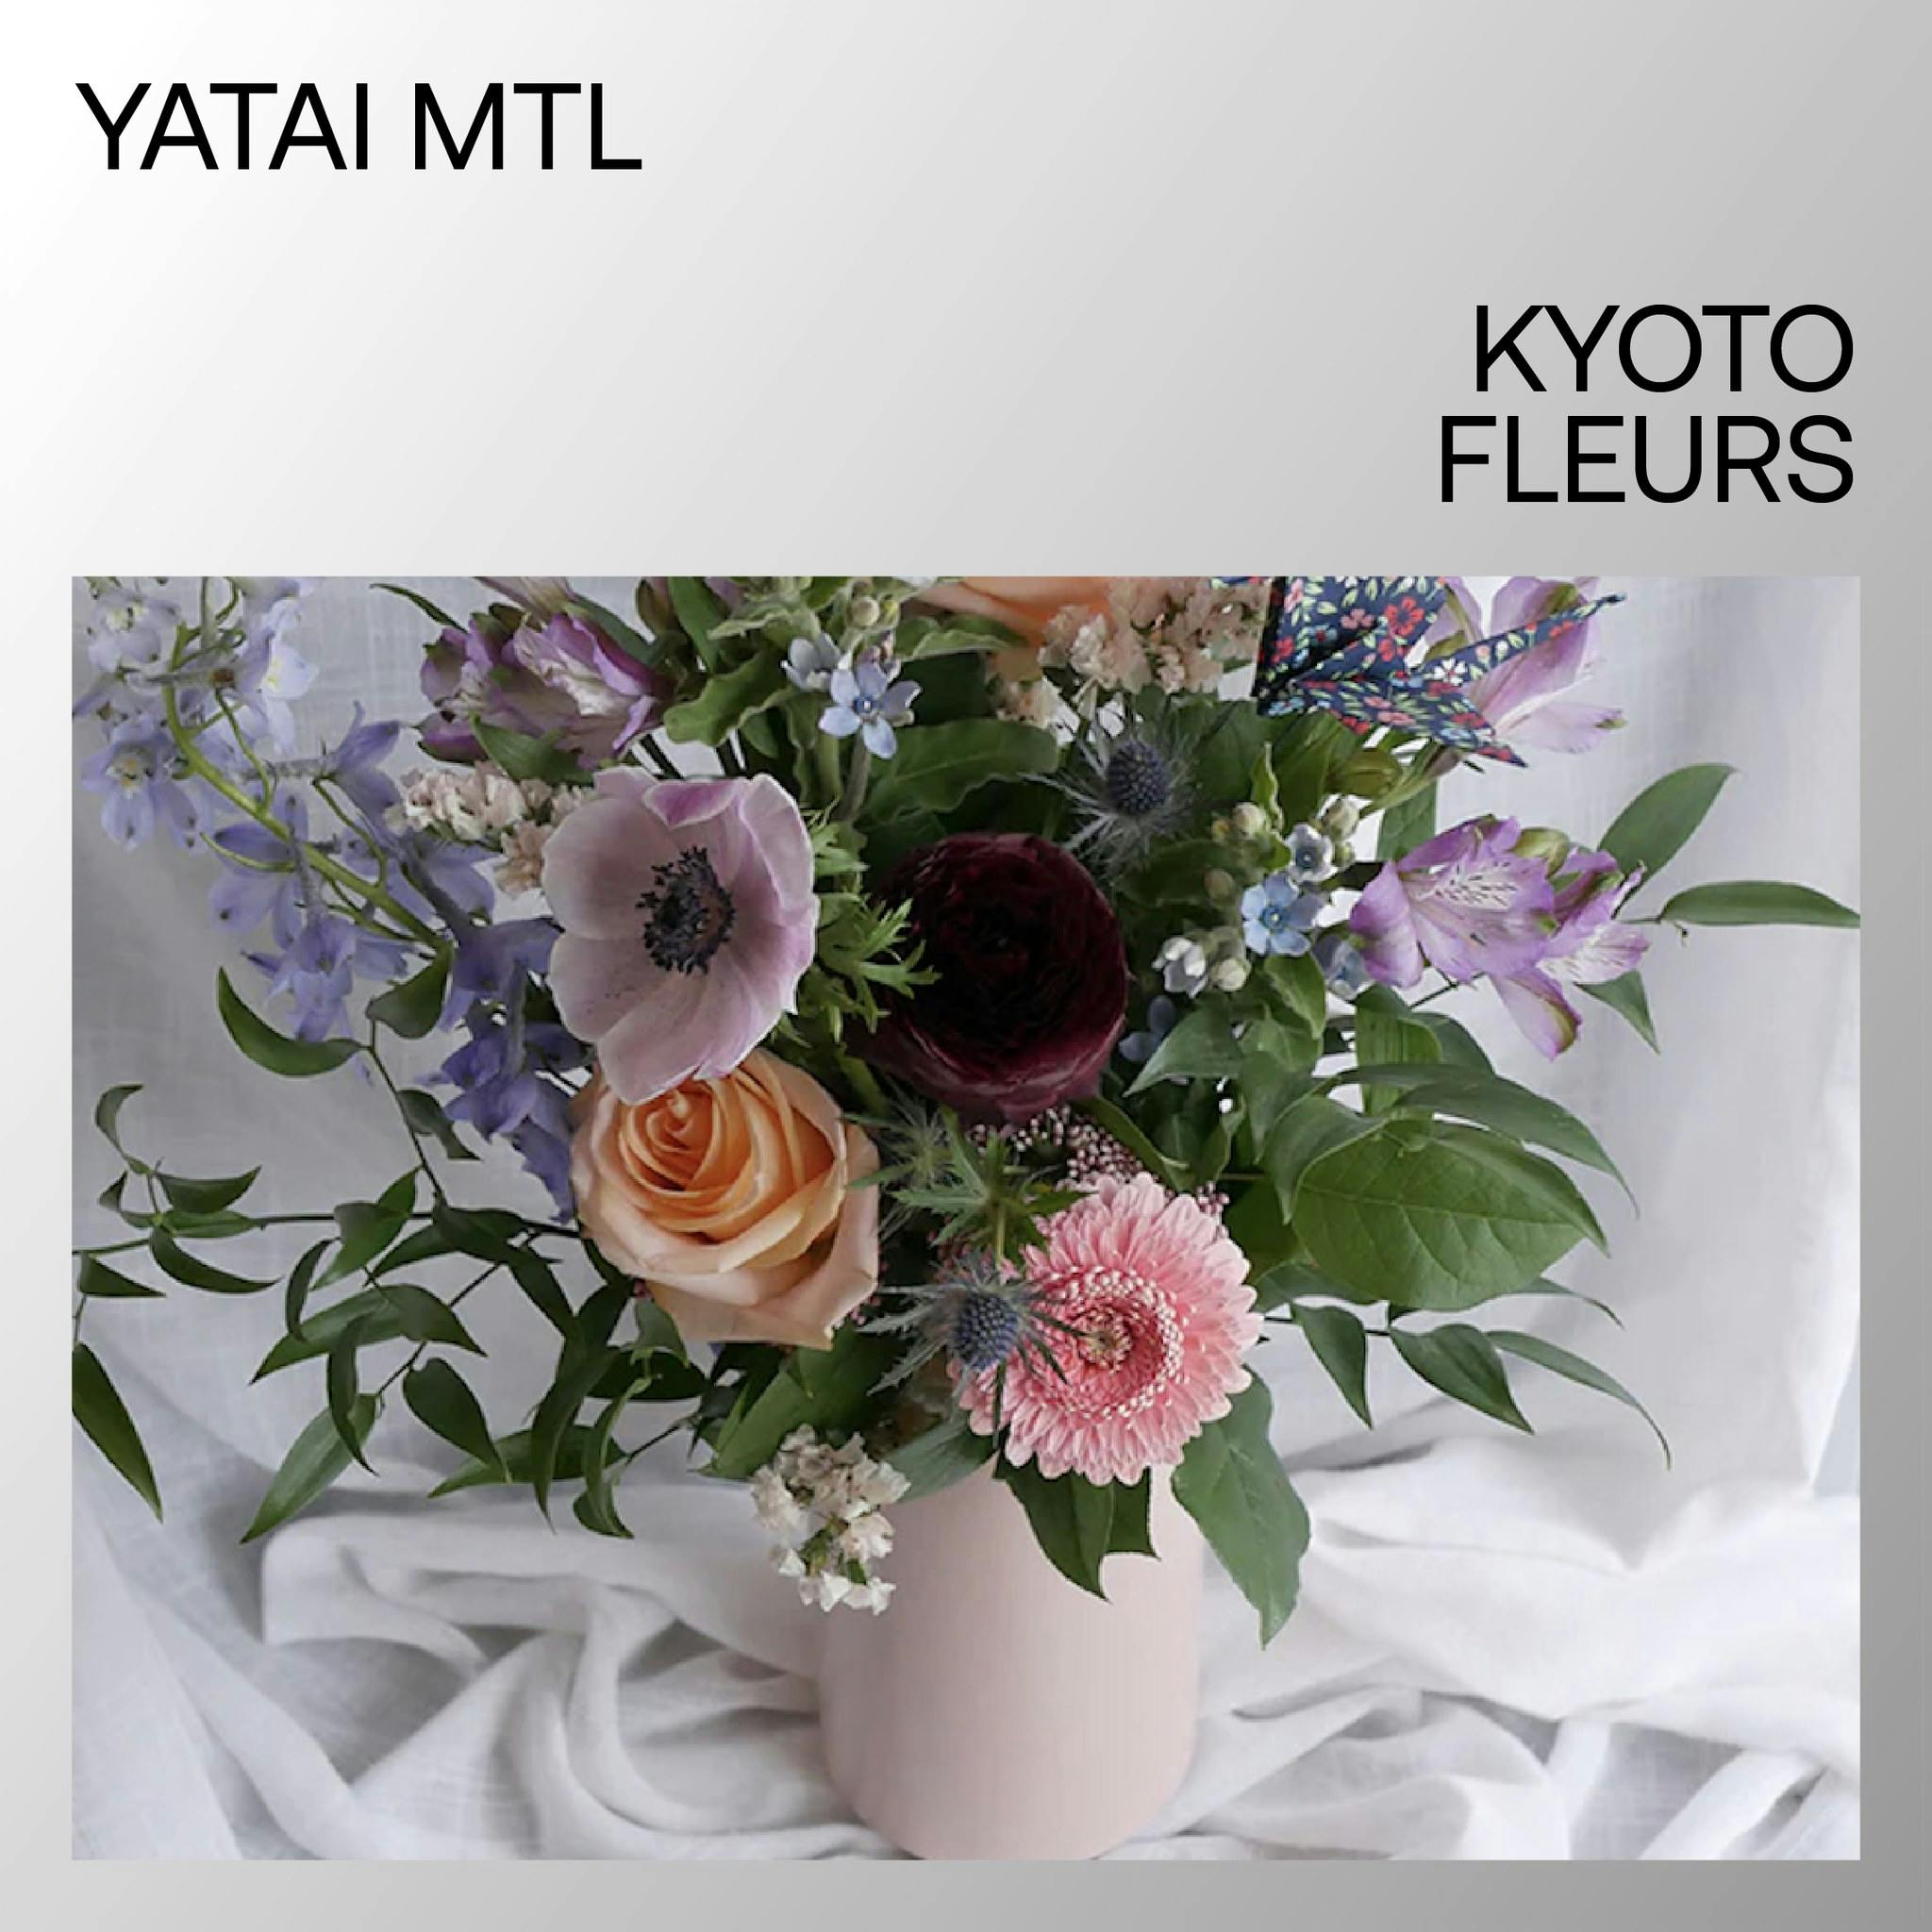 Kyoto Fleurs